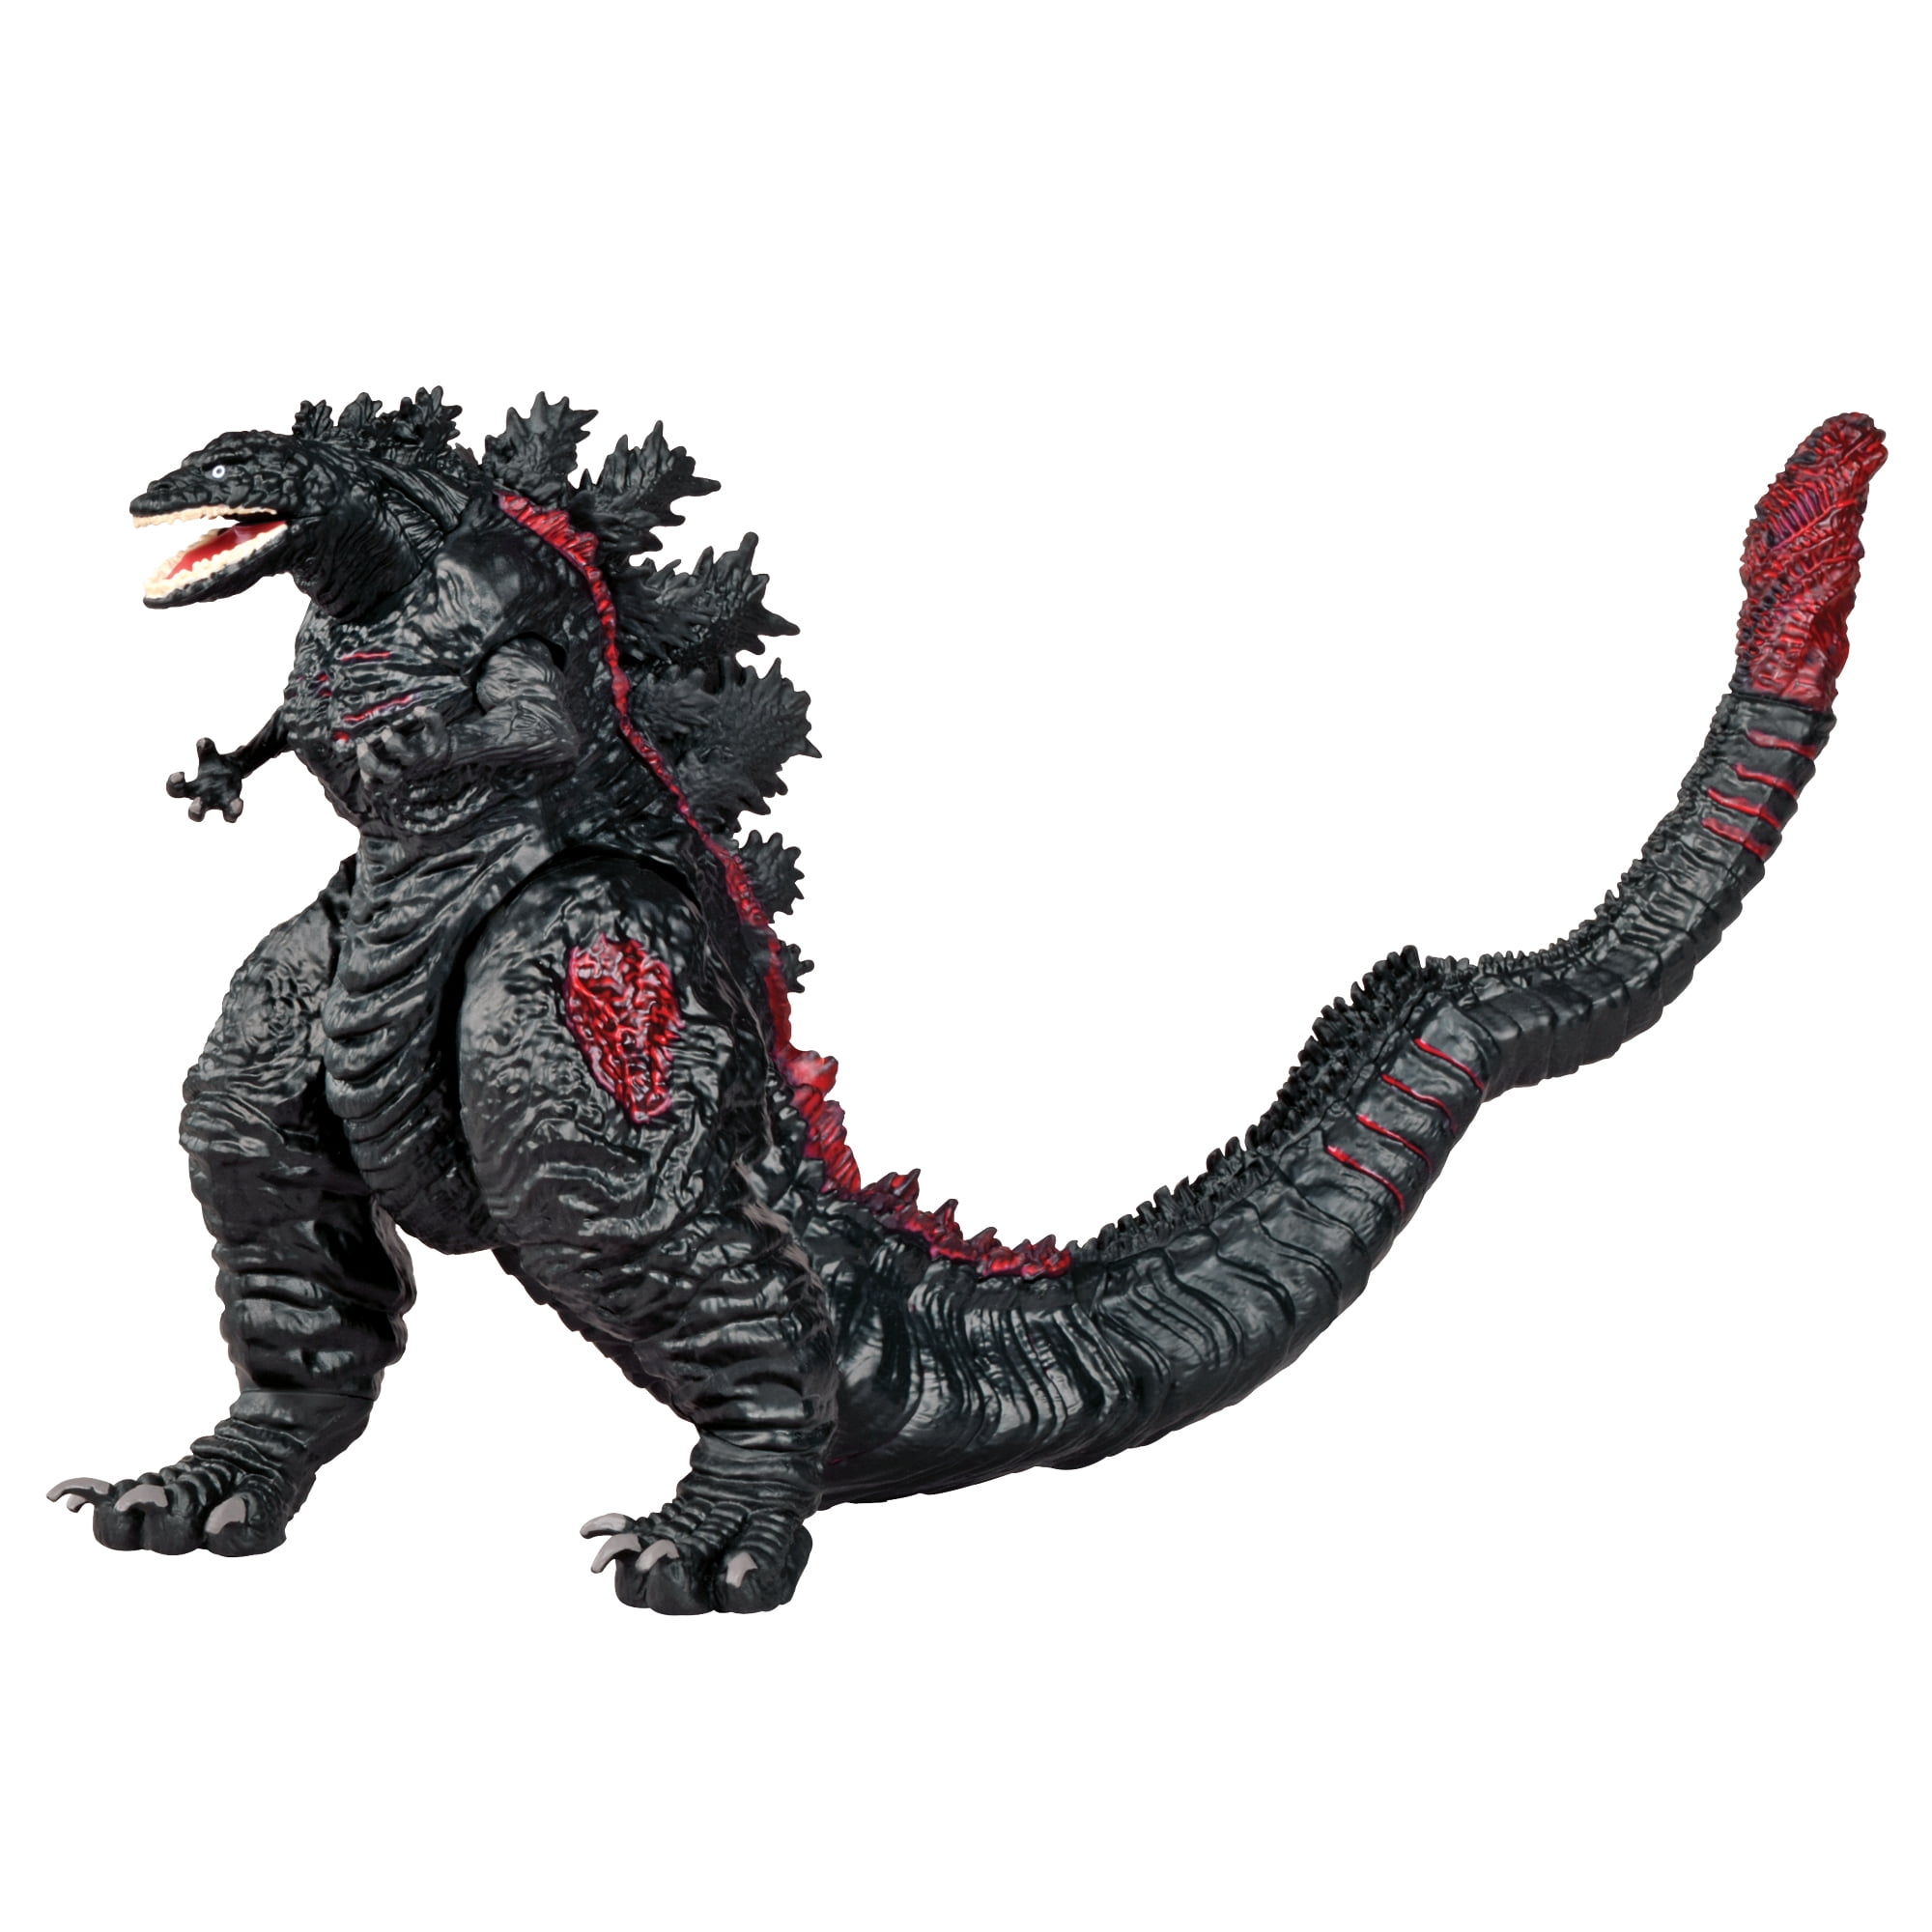 Bandai Toho Collection Godzilla 2016-2 Boxed 3" Scale Action Figure 